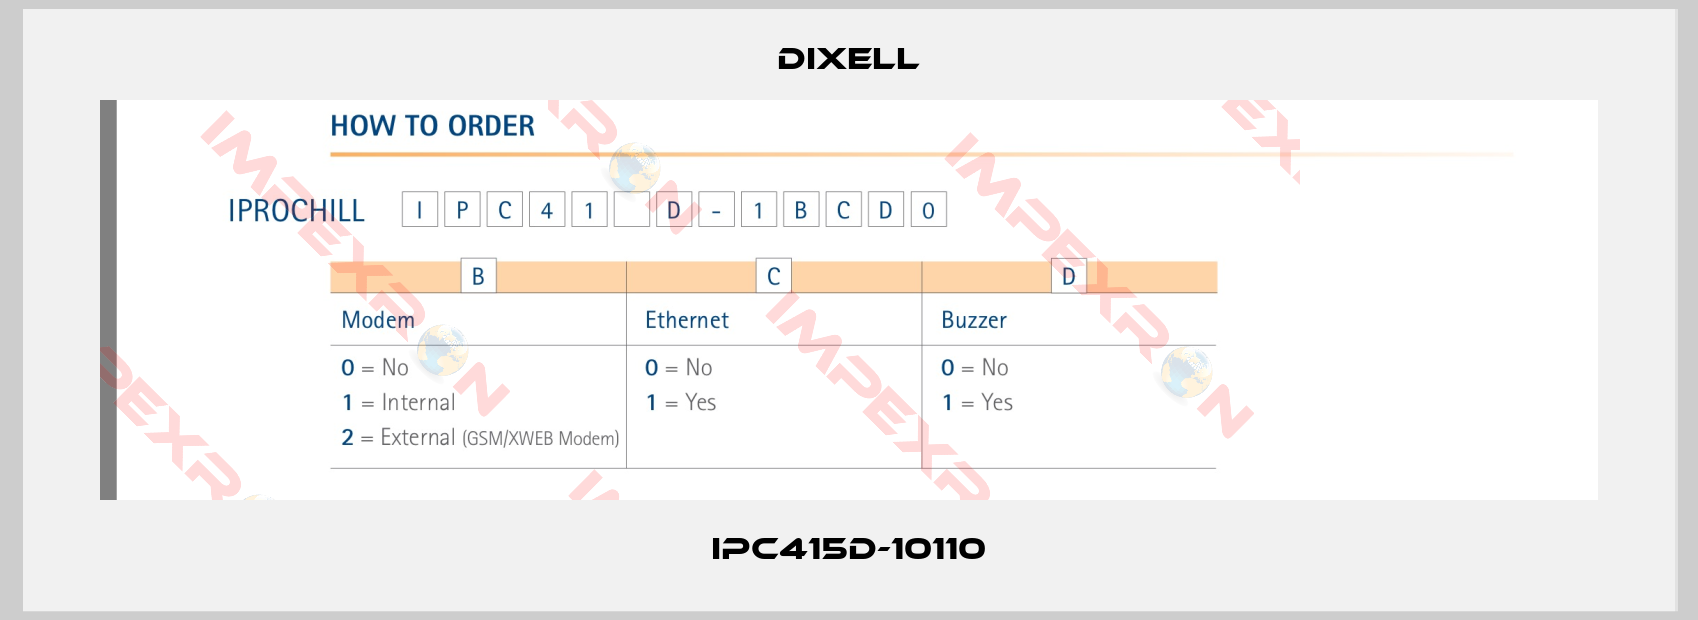 Dixell-IPC415D-10110